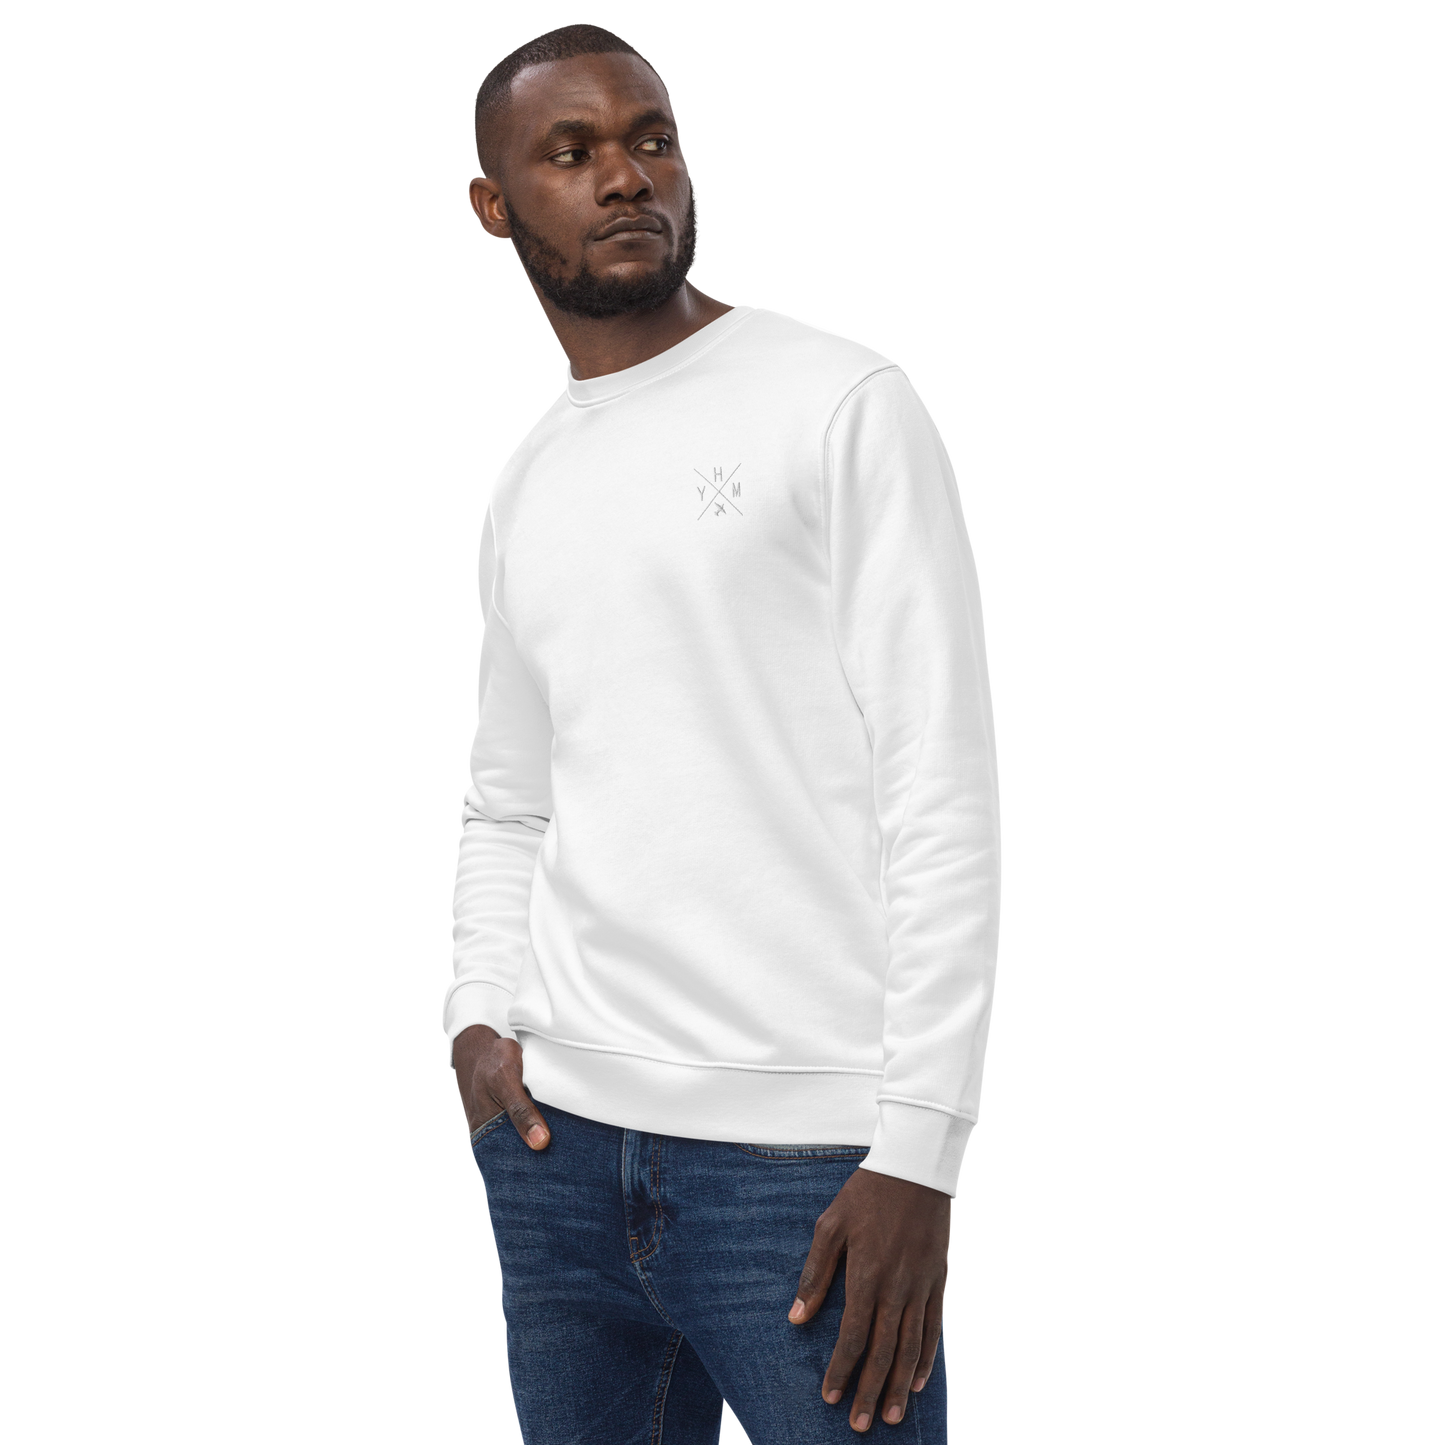 Crossed-X Unisex Eco Sweatshirt • White Embroidery